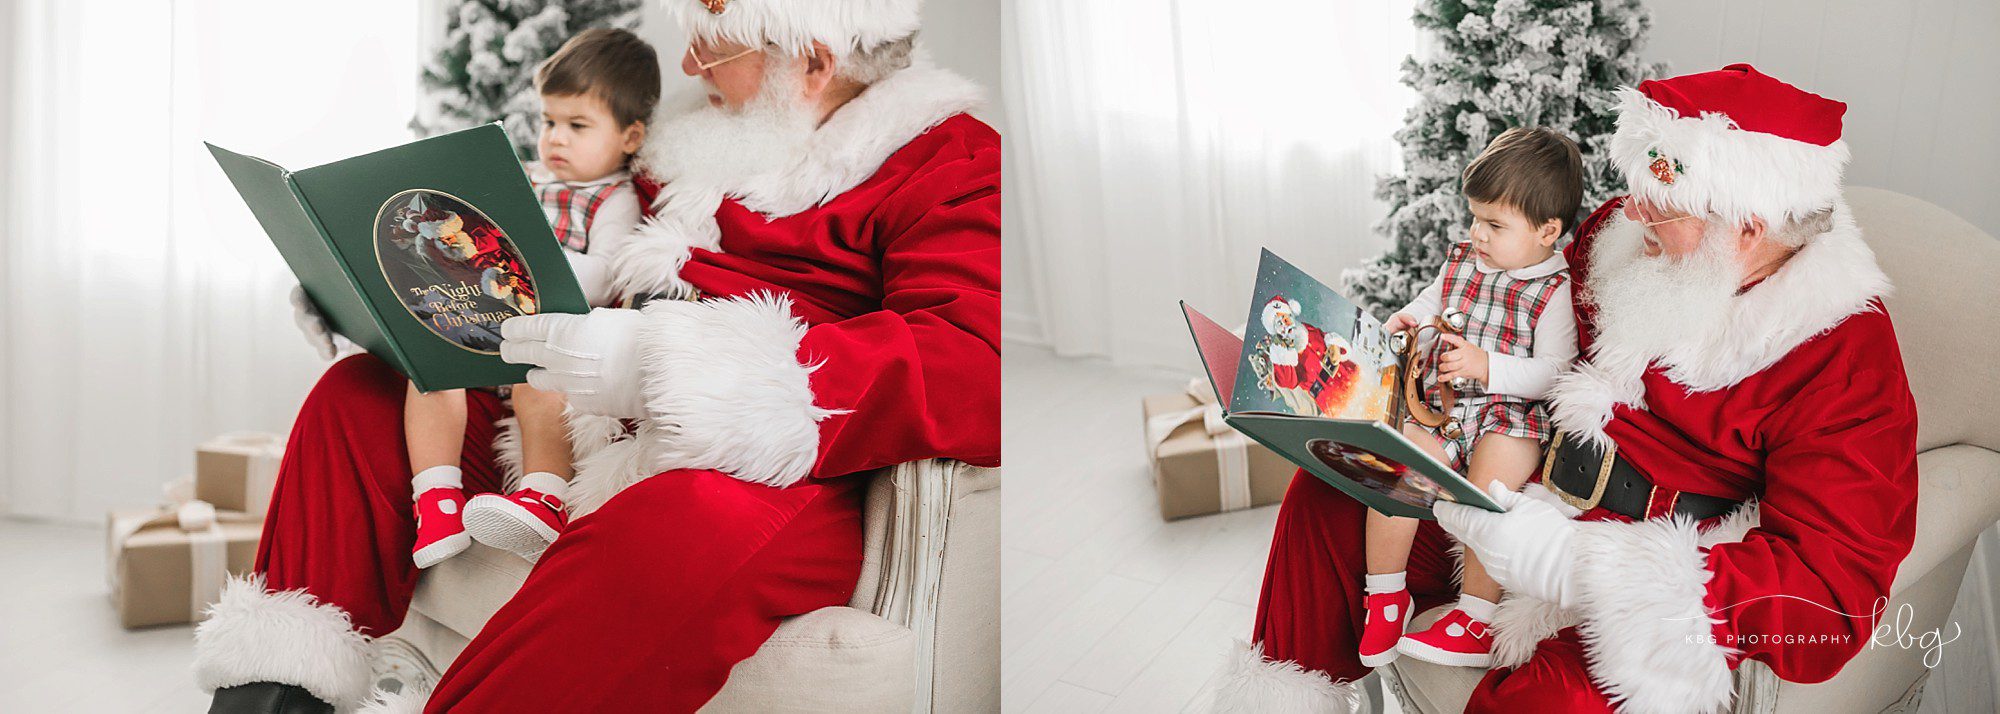 little boy reading with santa - marietta photographer